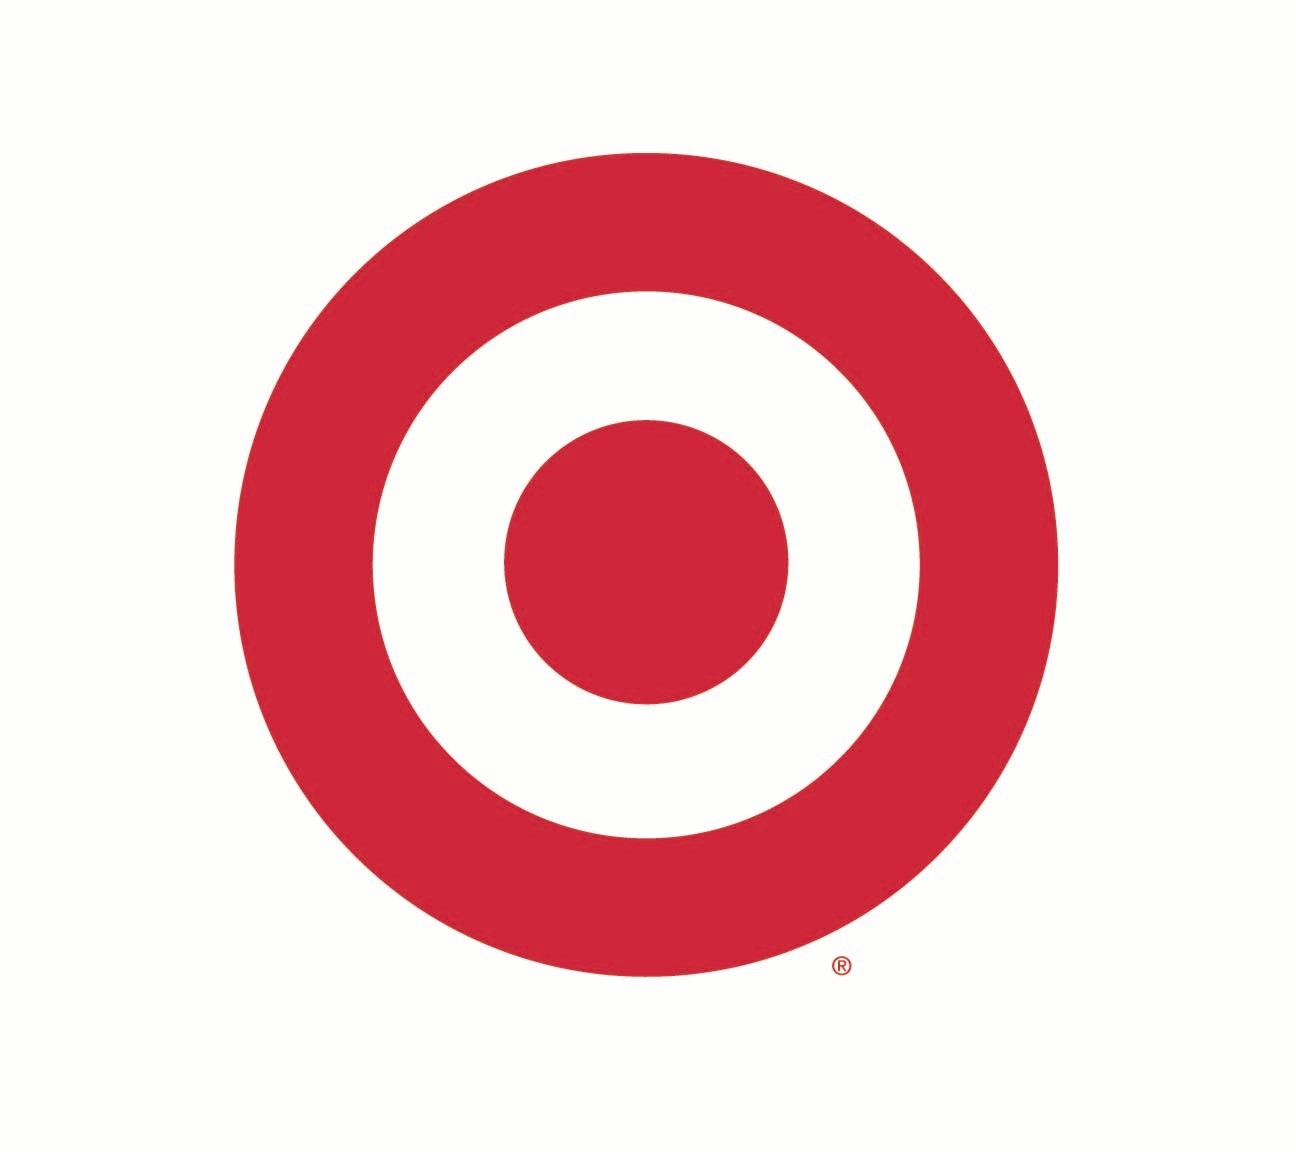 Logo . Bullseye clipart symbol target